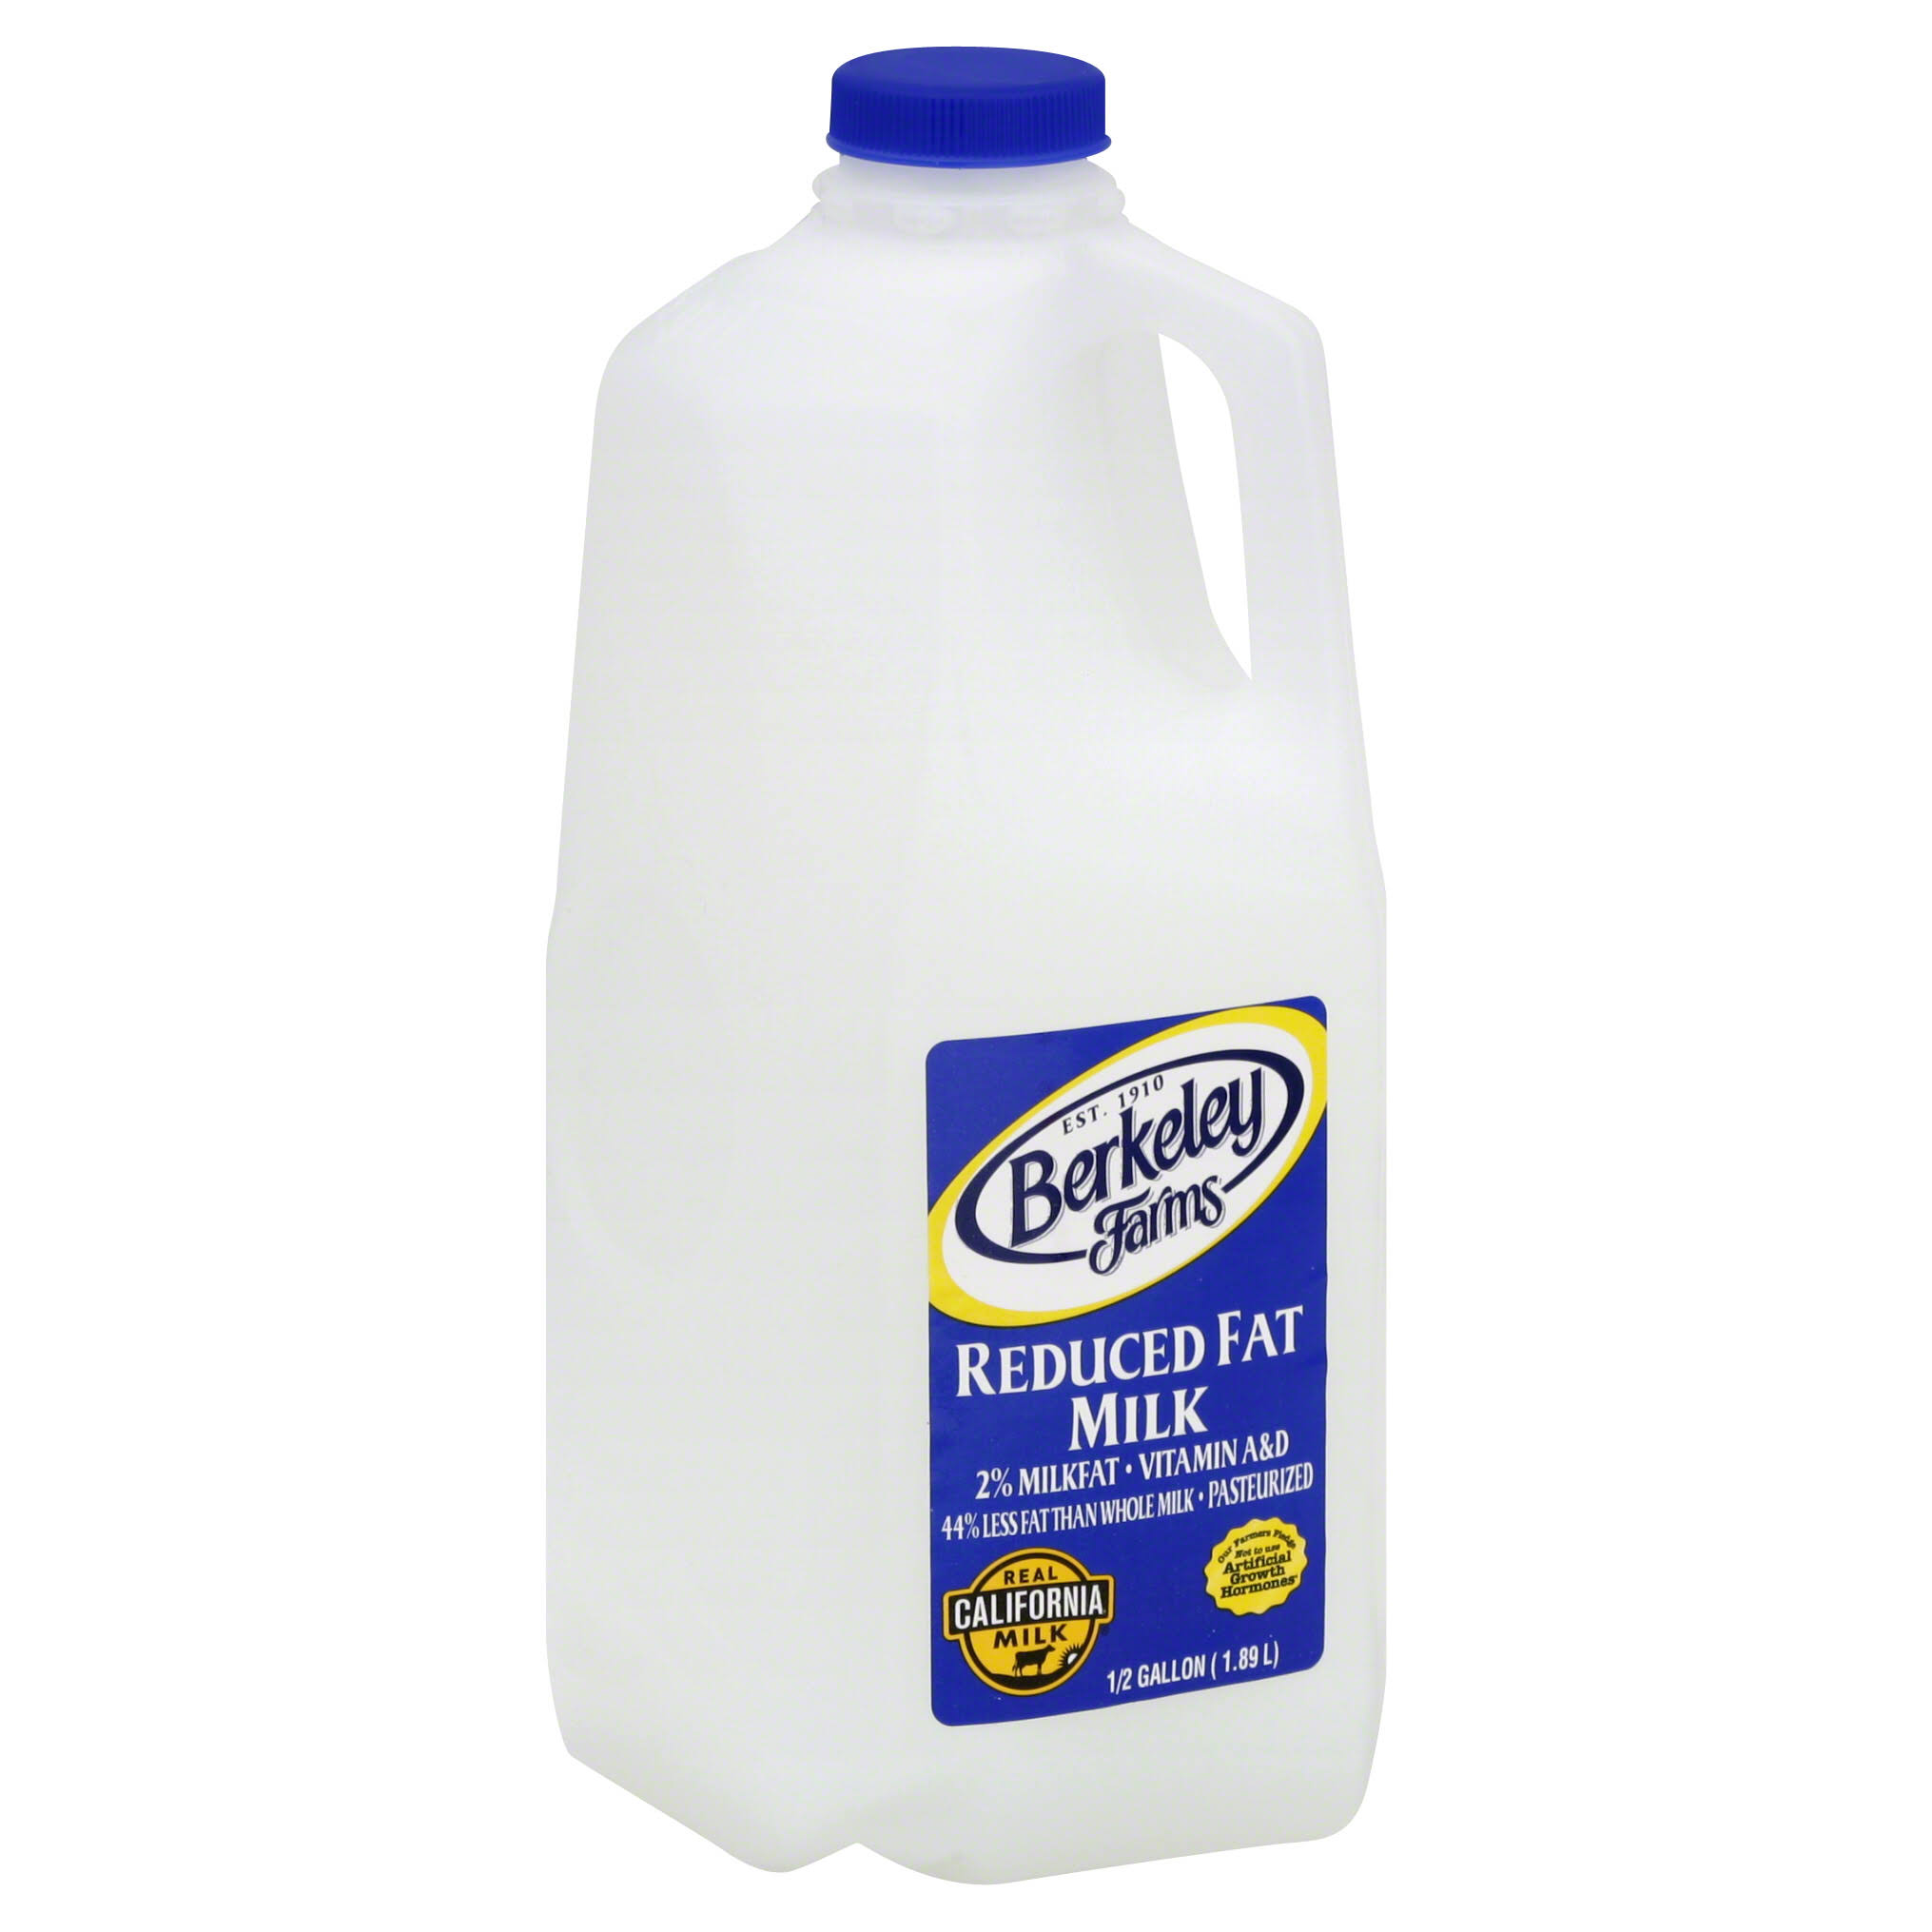 Berkeley Farms Milk, Reduced Fat, 2% Milkfat - 0.5 gl (1.89 lt)